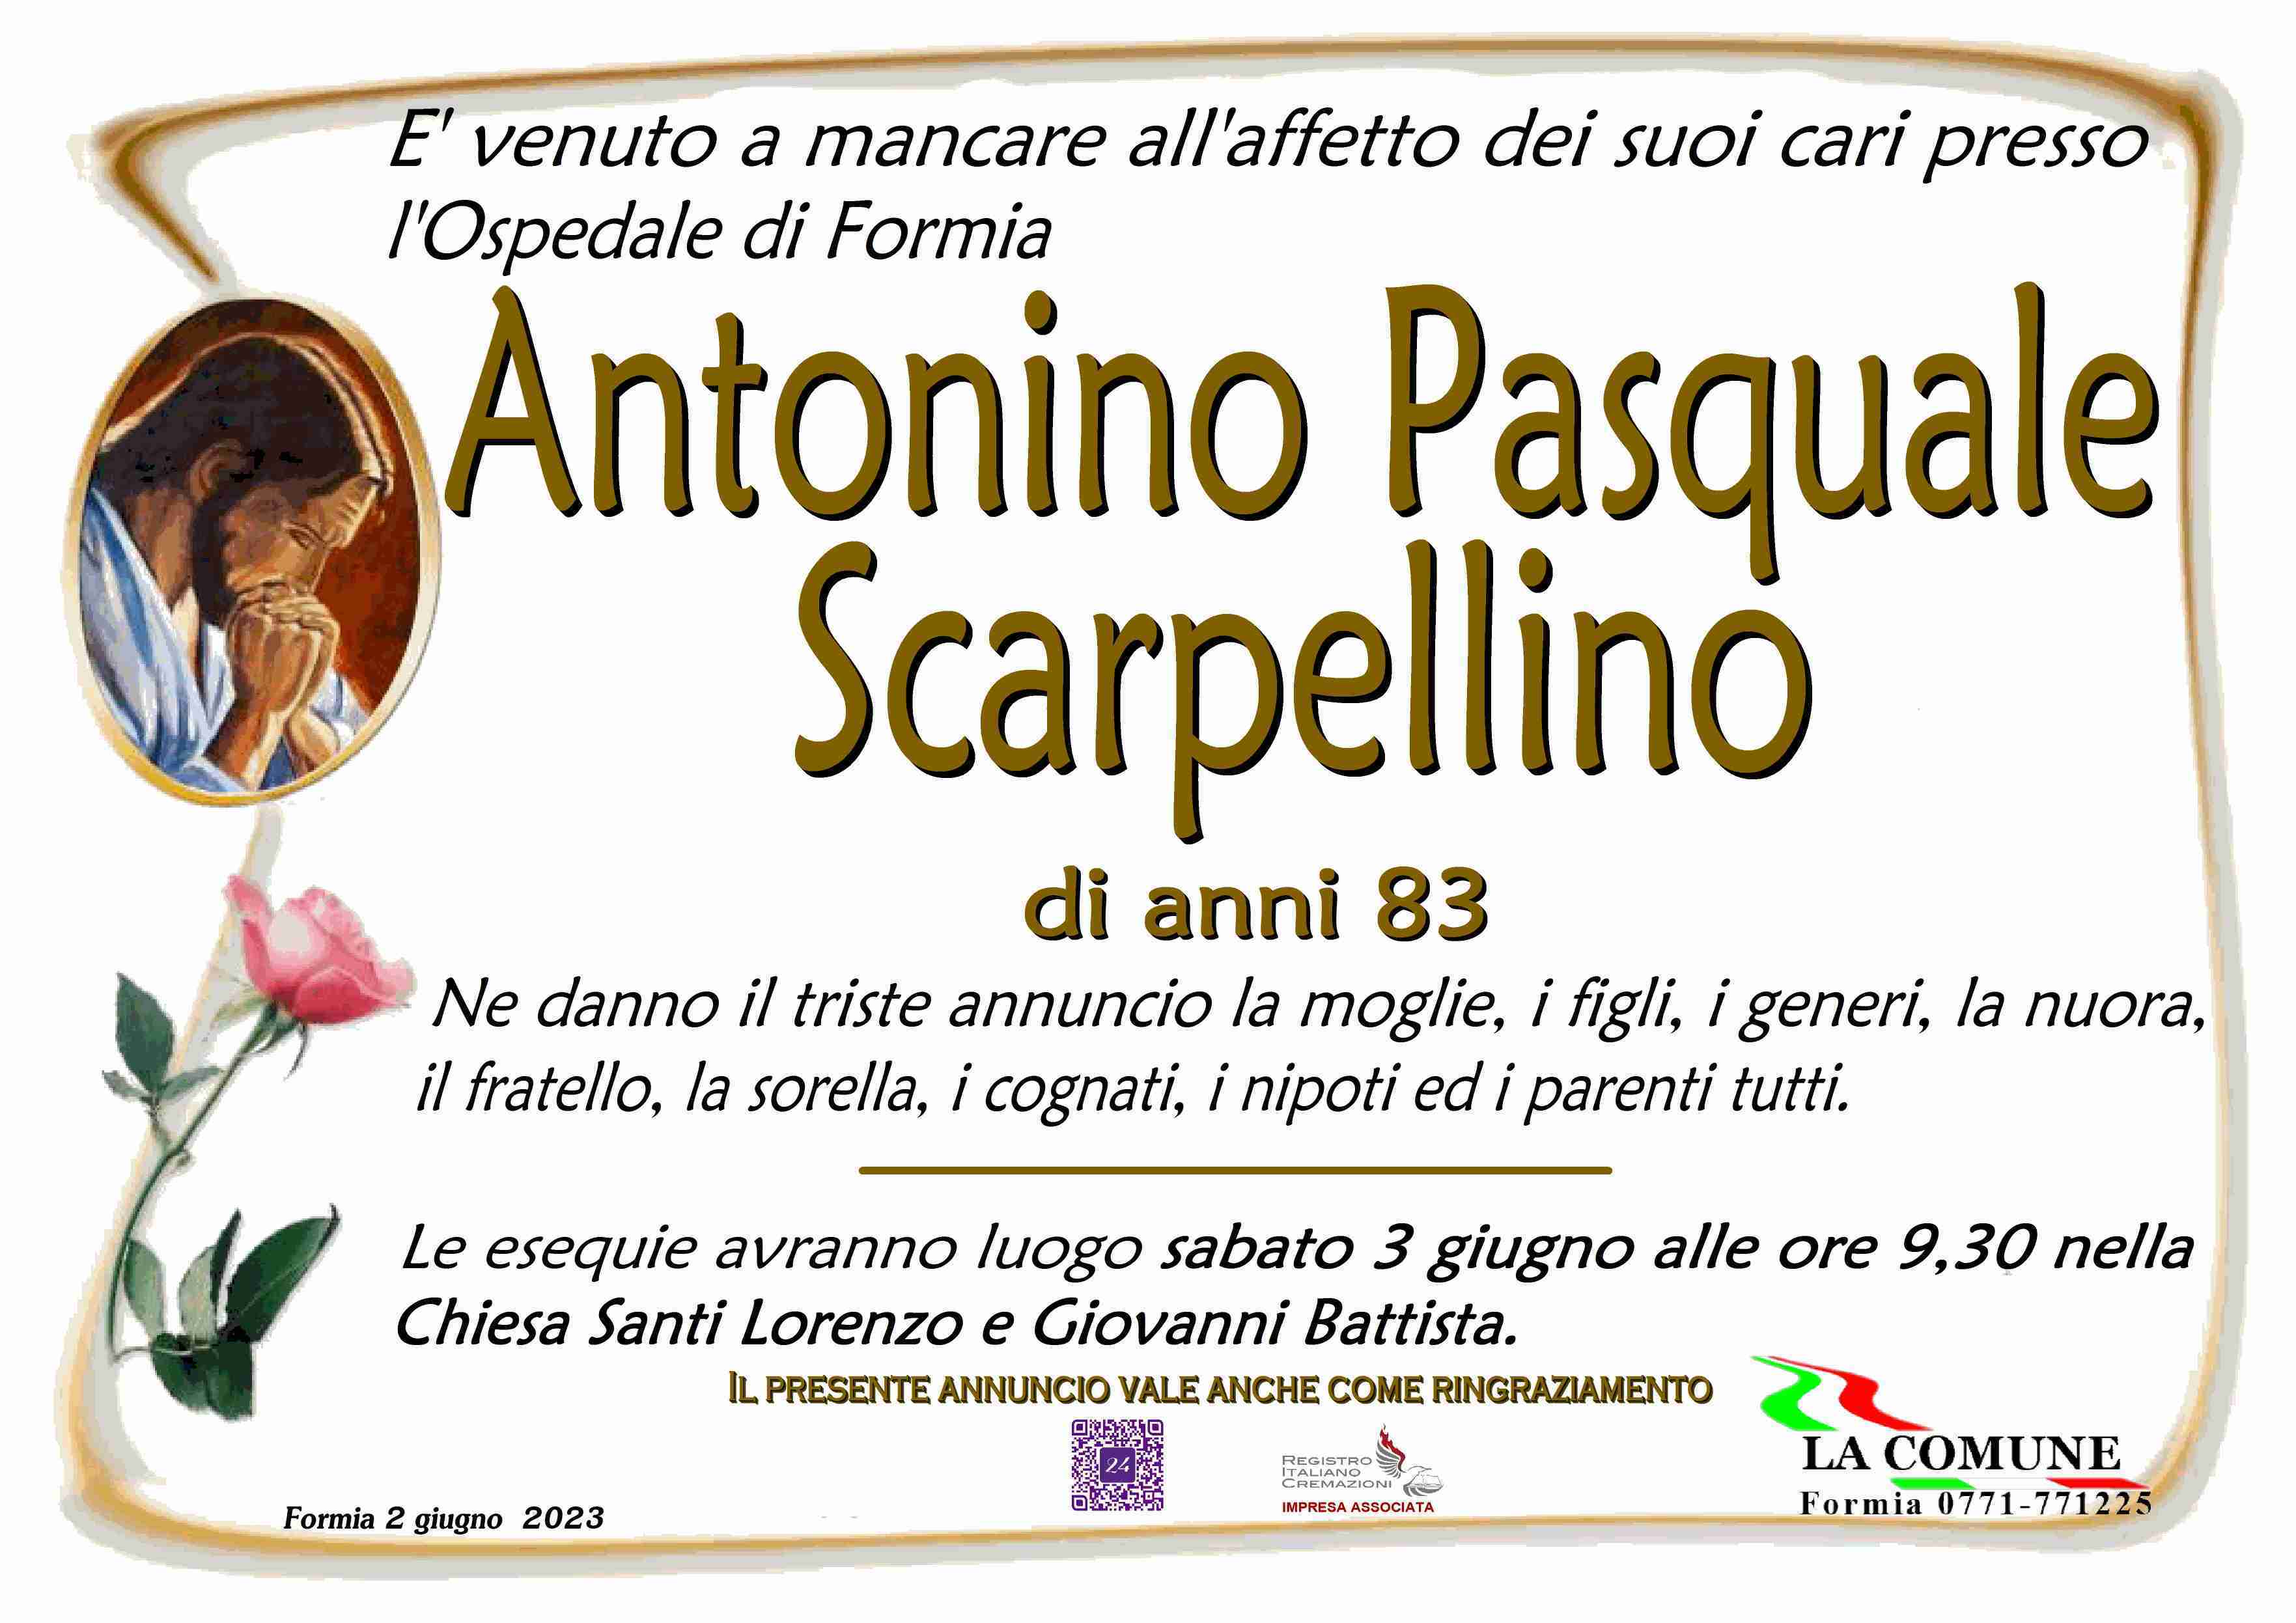 Antonino Pasquale Scarpellino